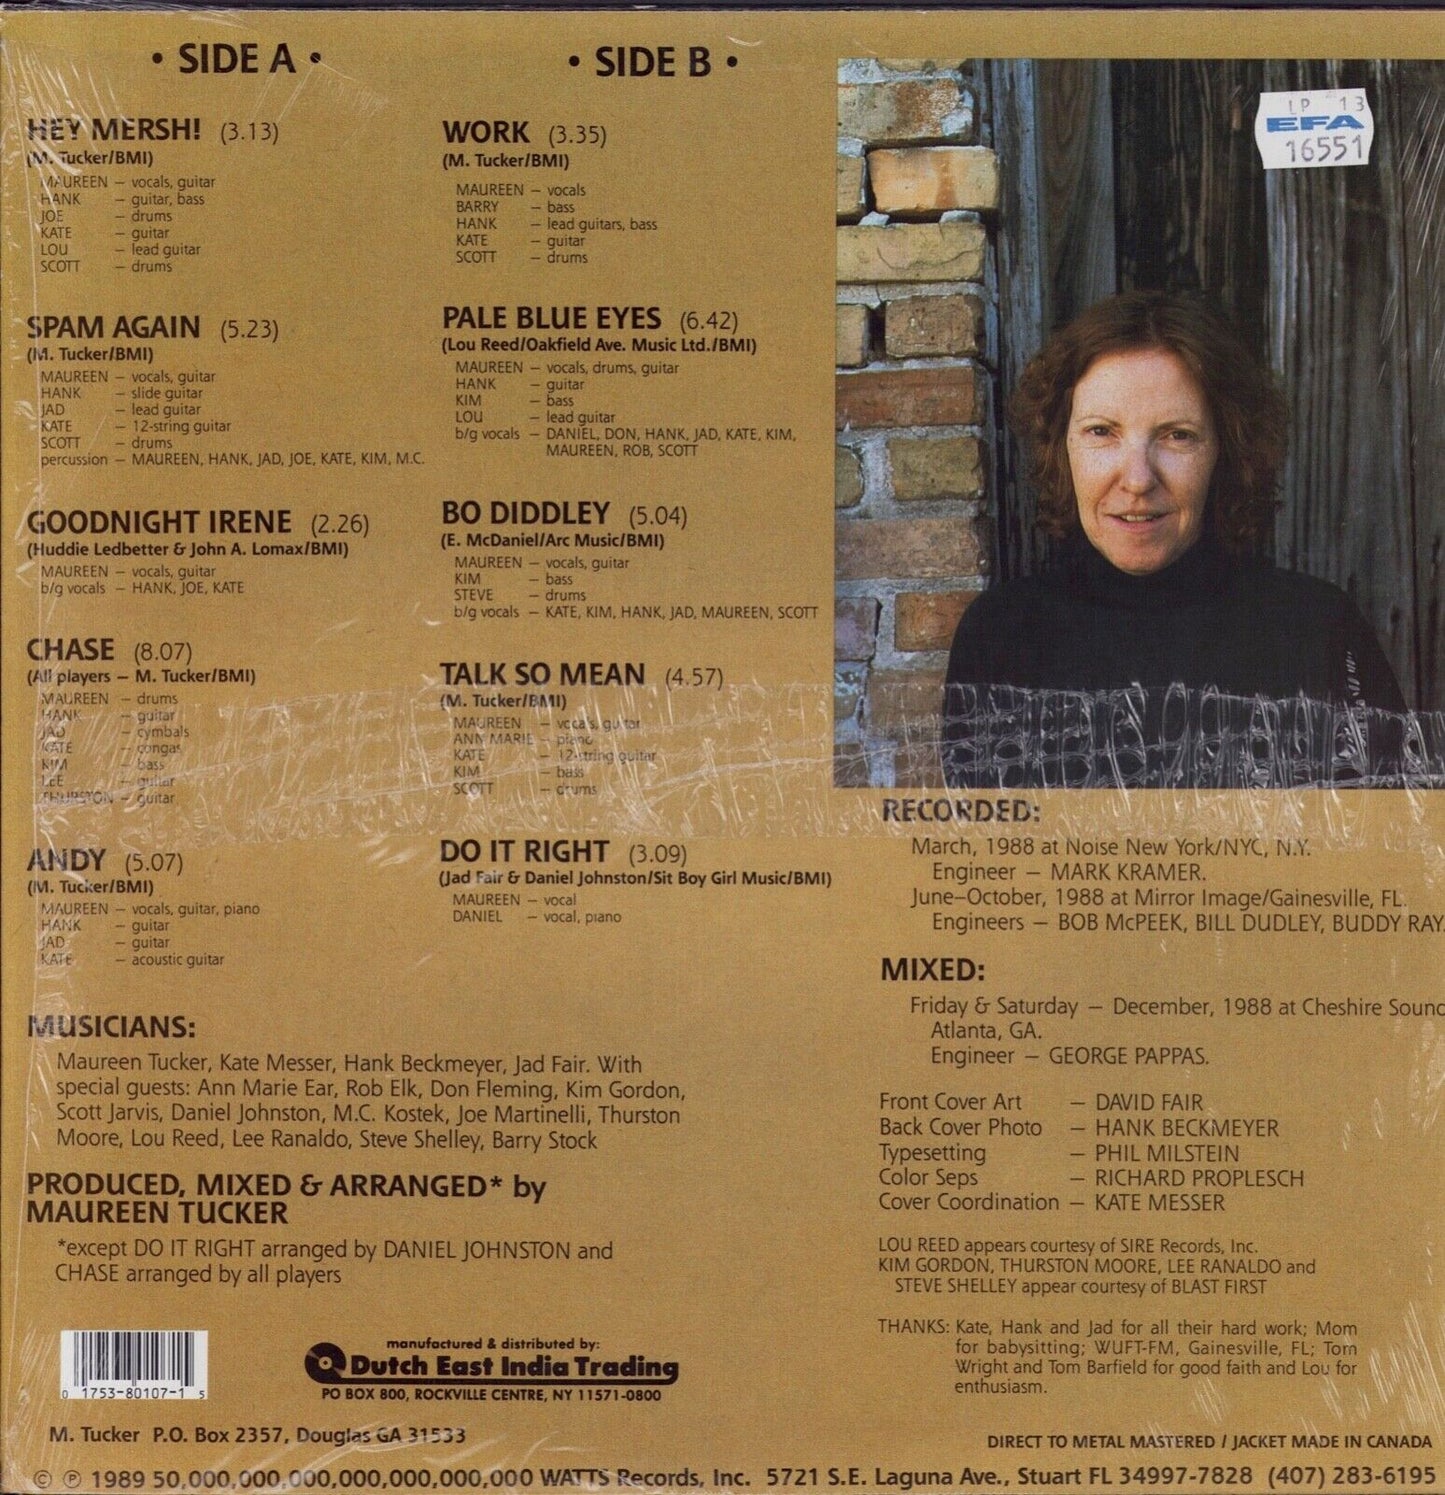 Maureen Tucker - Life In Exile After Abdication Vinyl LP